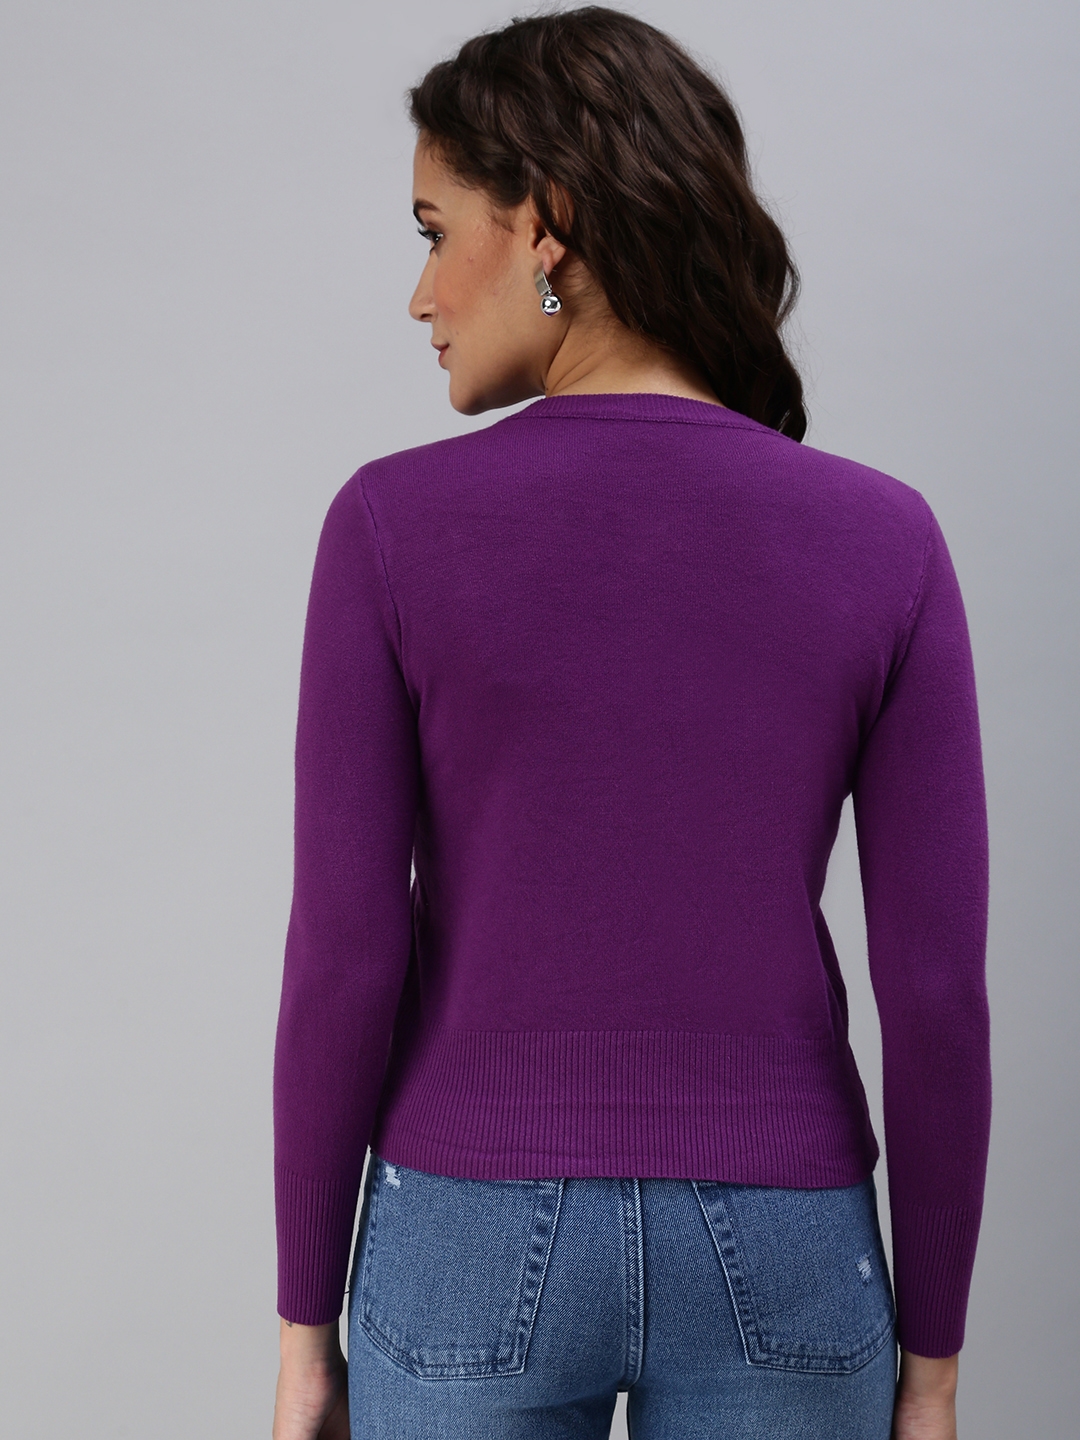 Women's Purple Acrylic Solid Tops